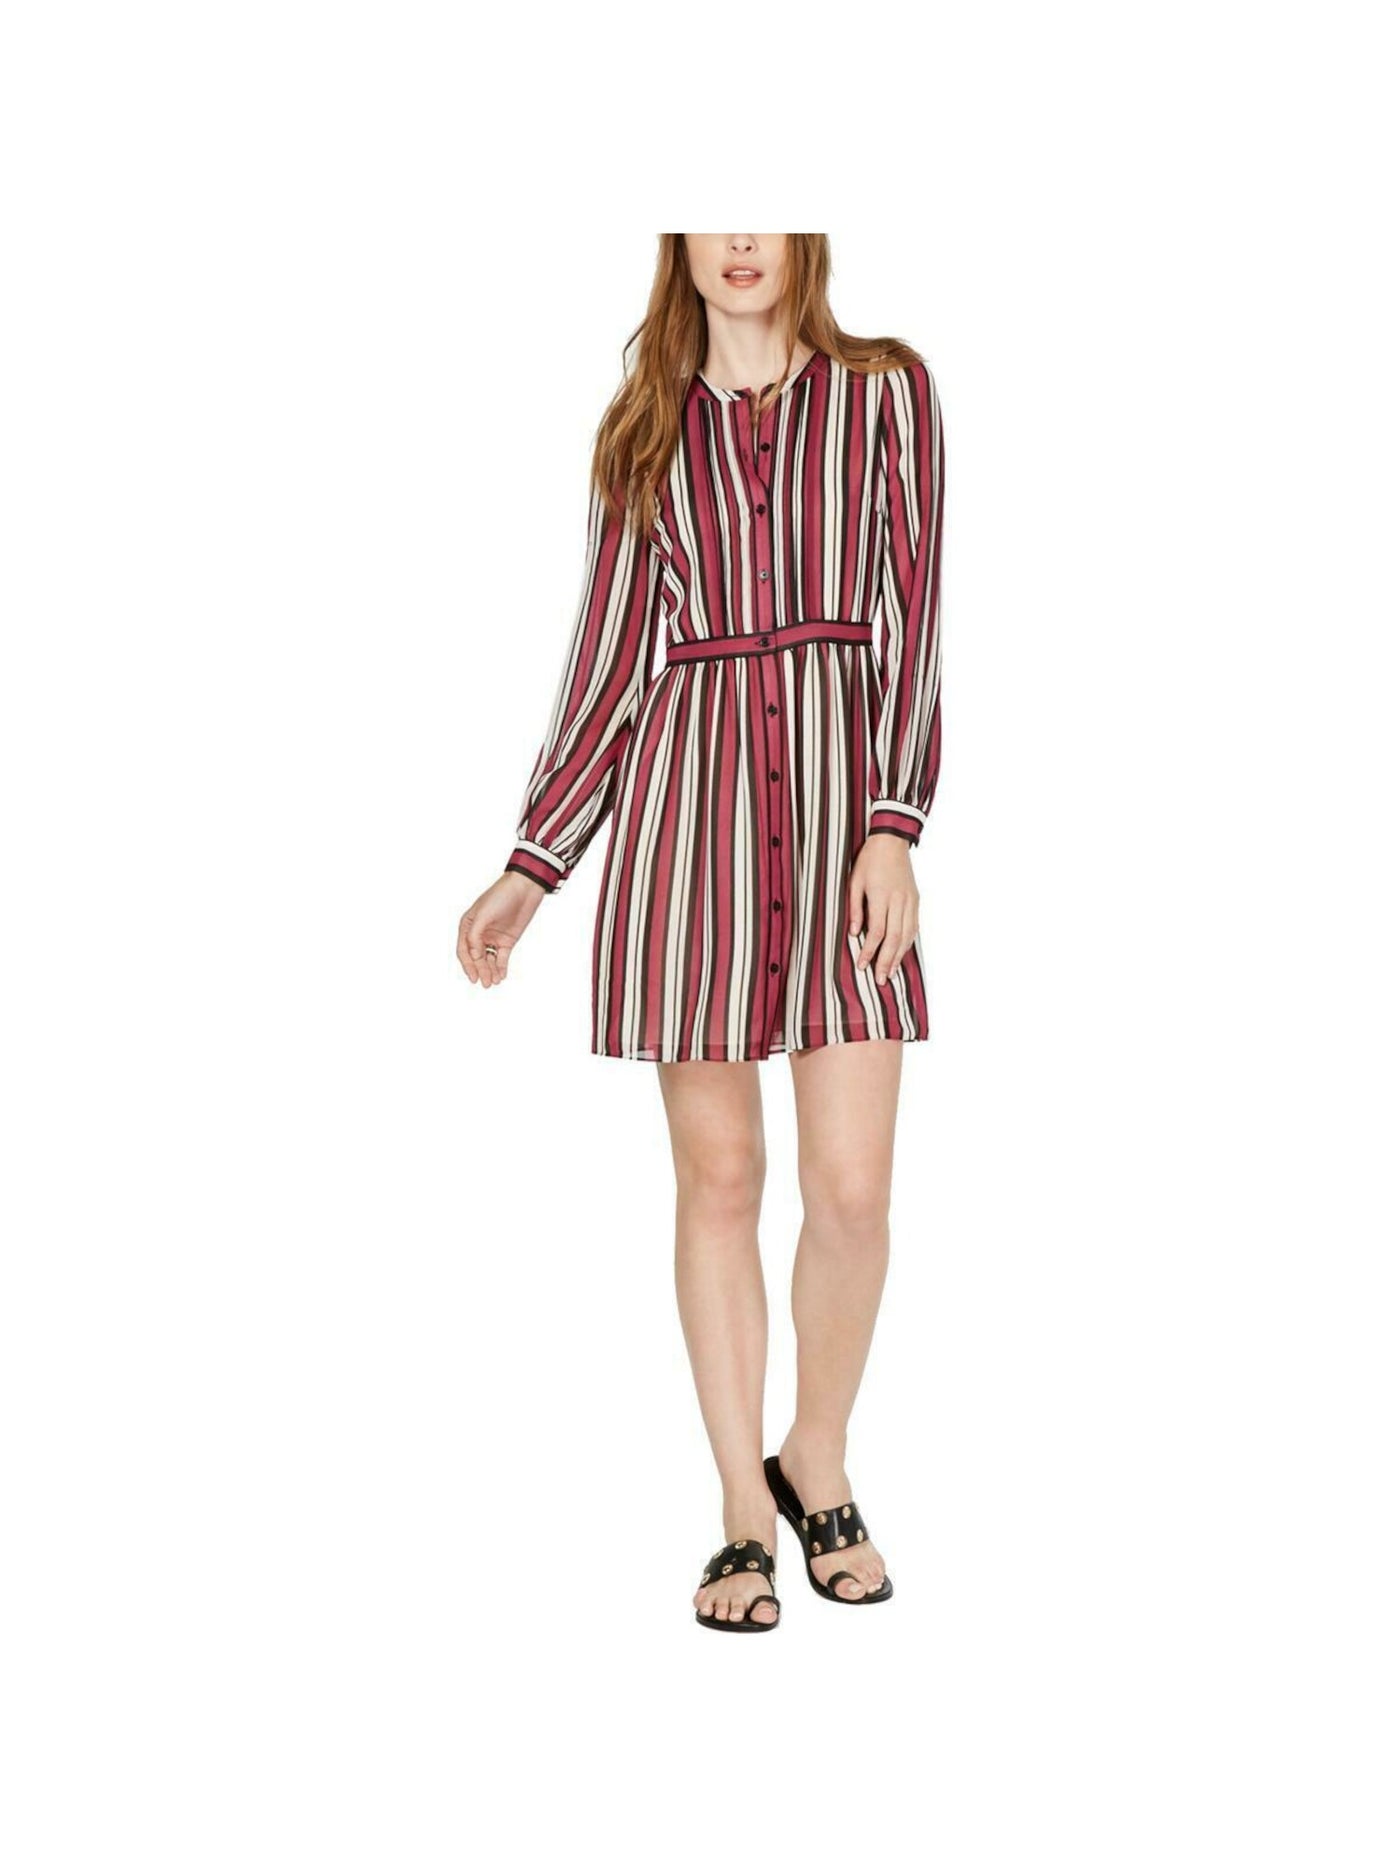 MICHAEL KORS Womens Red Striped Long Sleeve Short Sheath Dress Size: XL